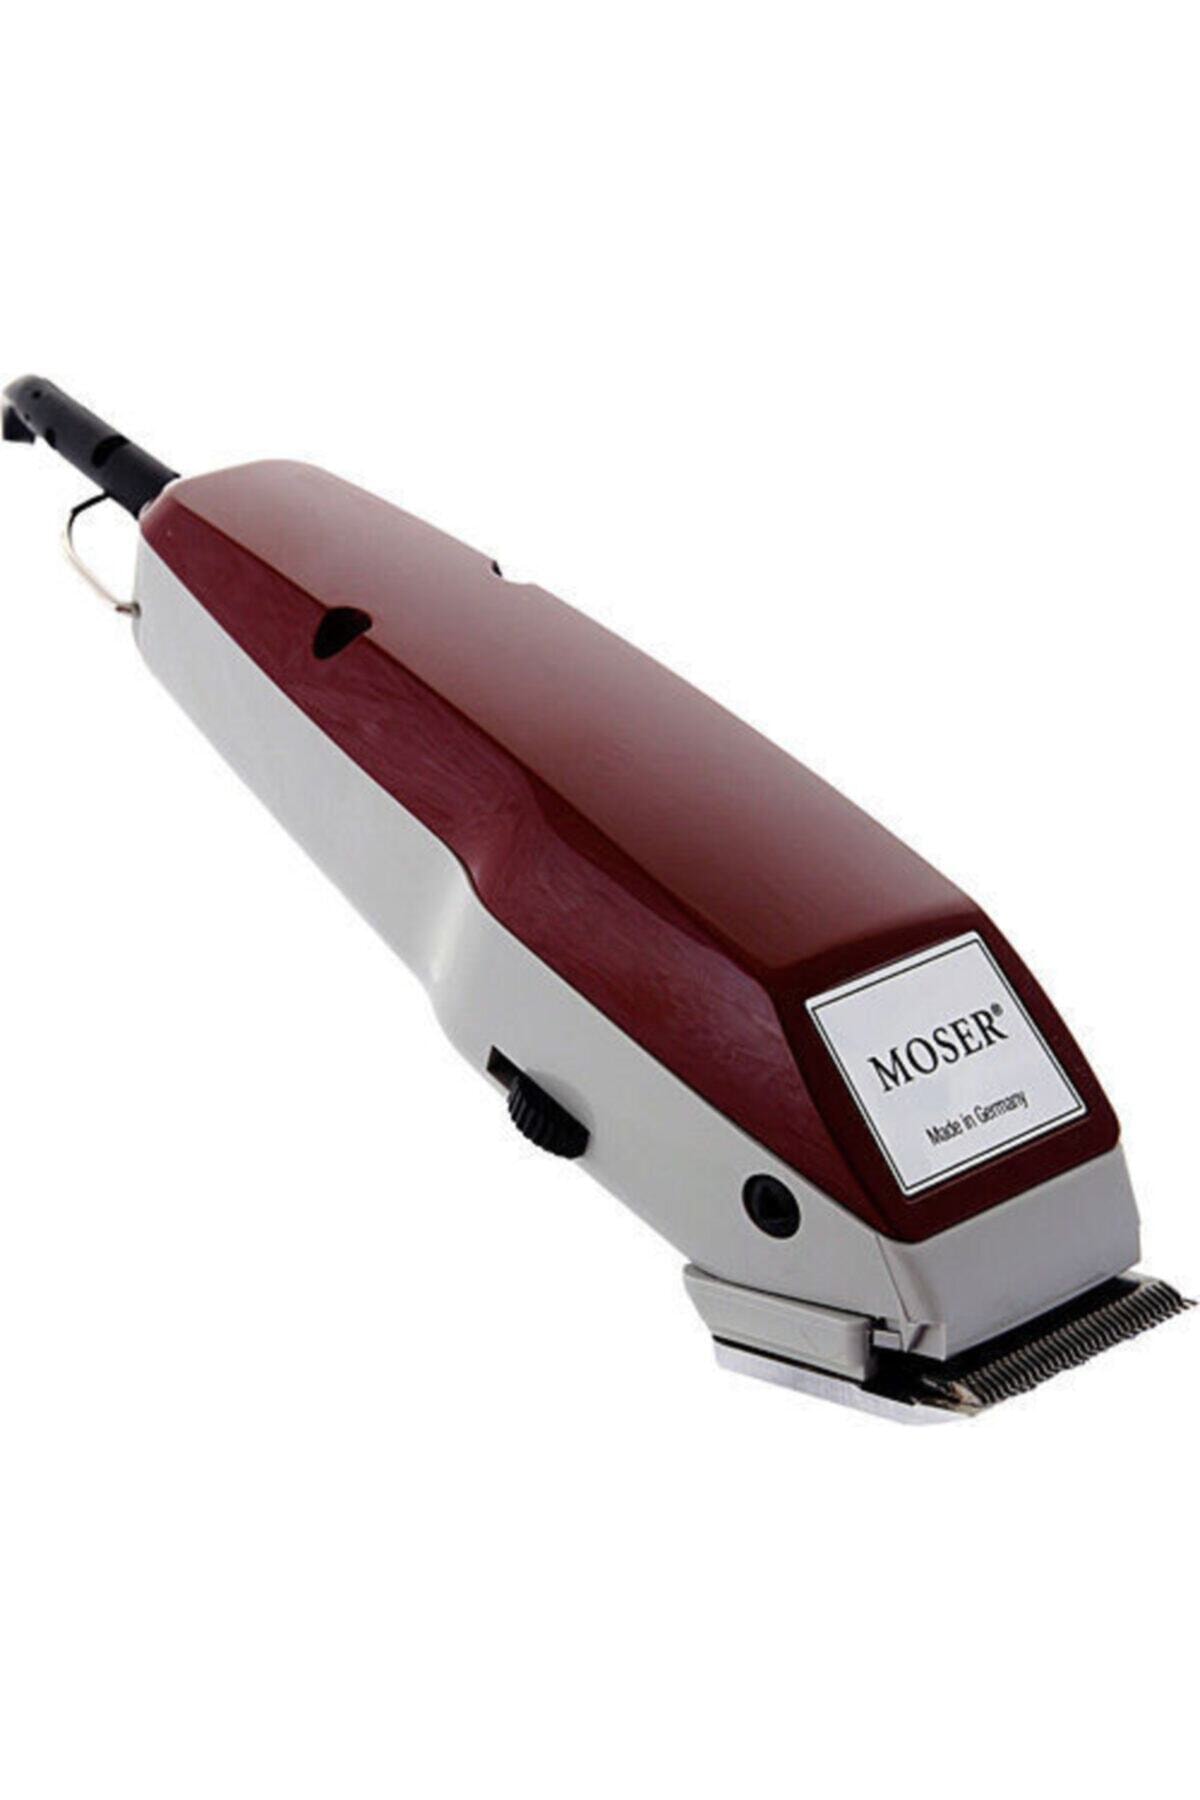 Moser Saç Kesme Tıraş Makinesi 1400 1400-0050